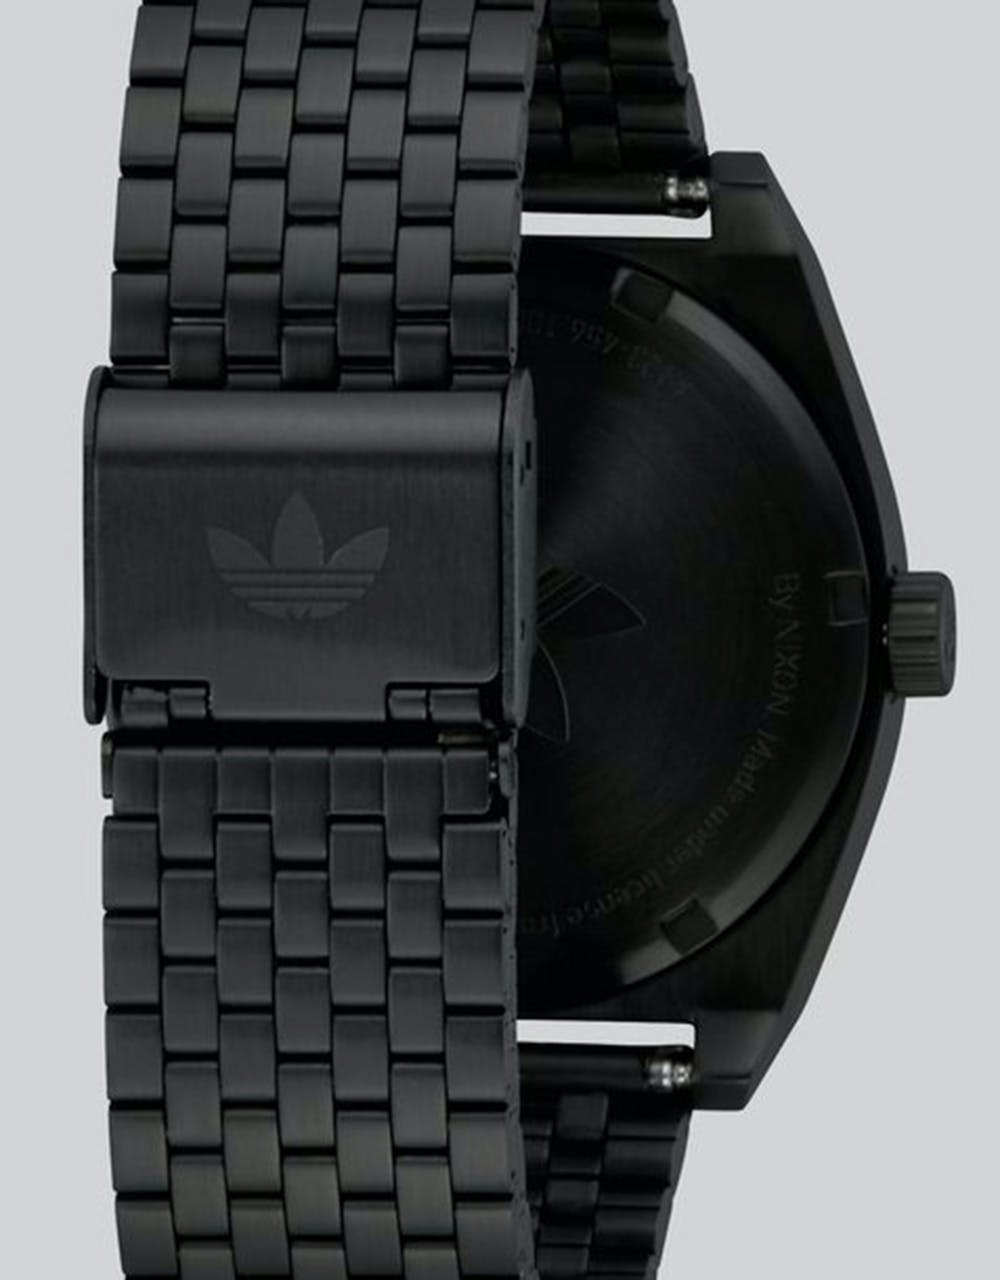 Adidas Process M1 Watch - All Black